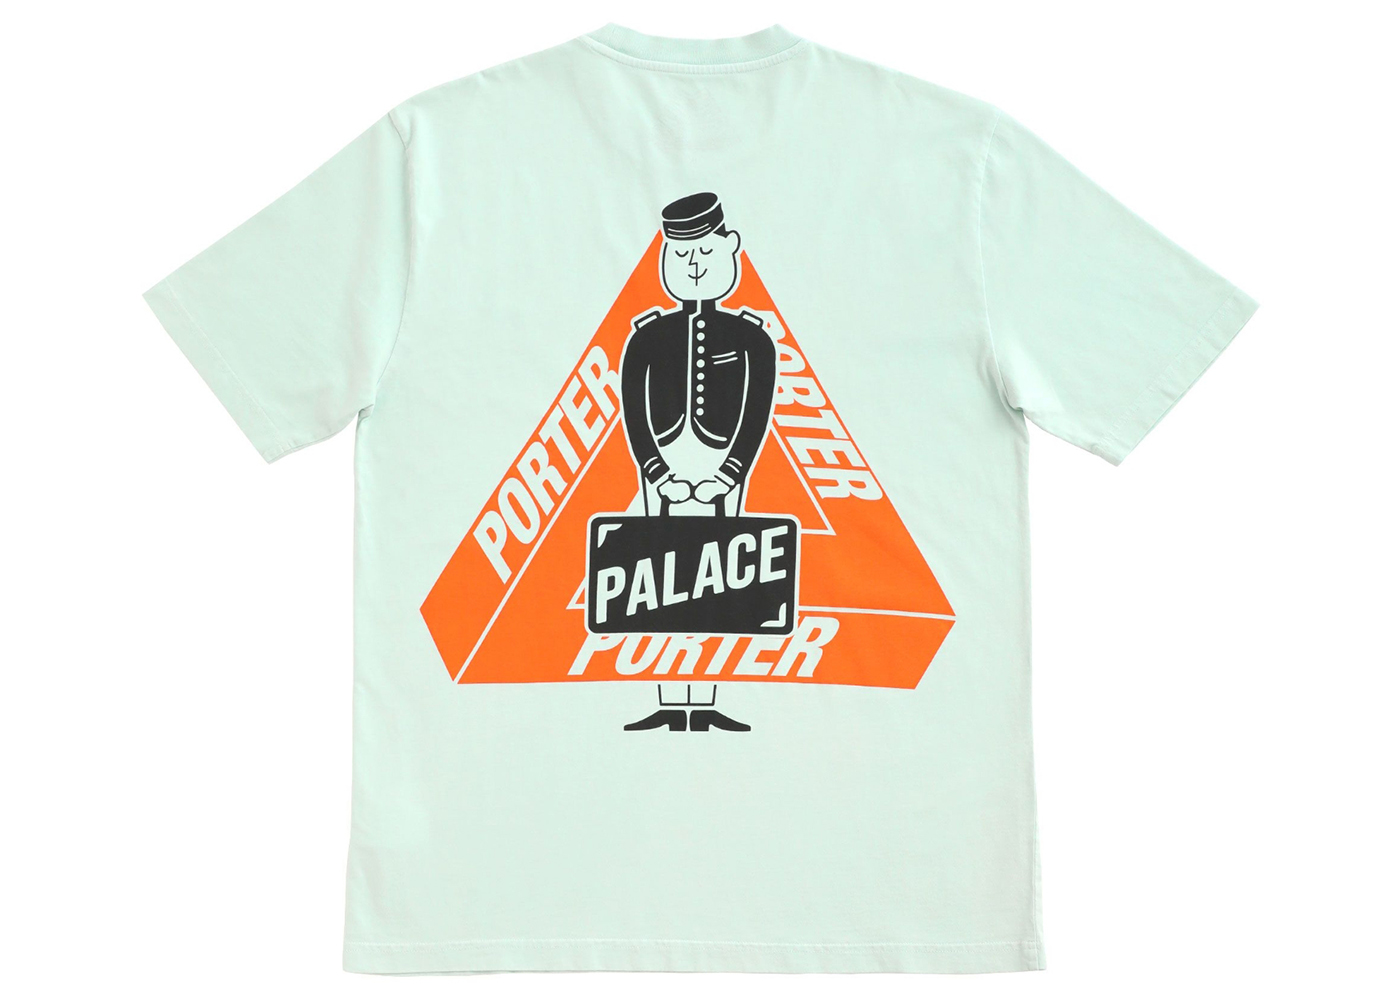 Palace x Porter Tri Ferg Bell Boy T-Shirt Blue